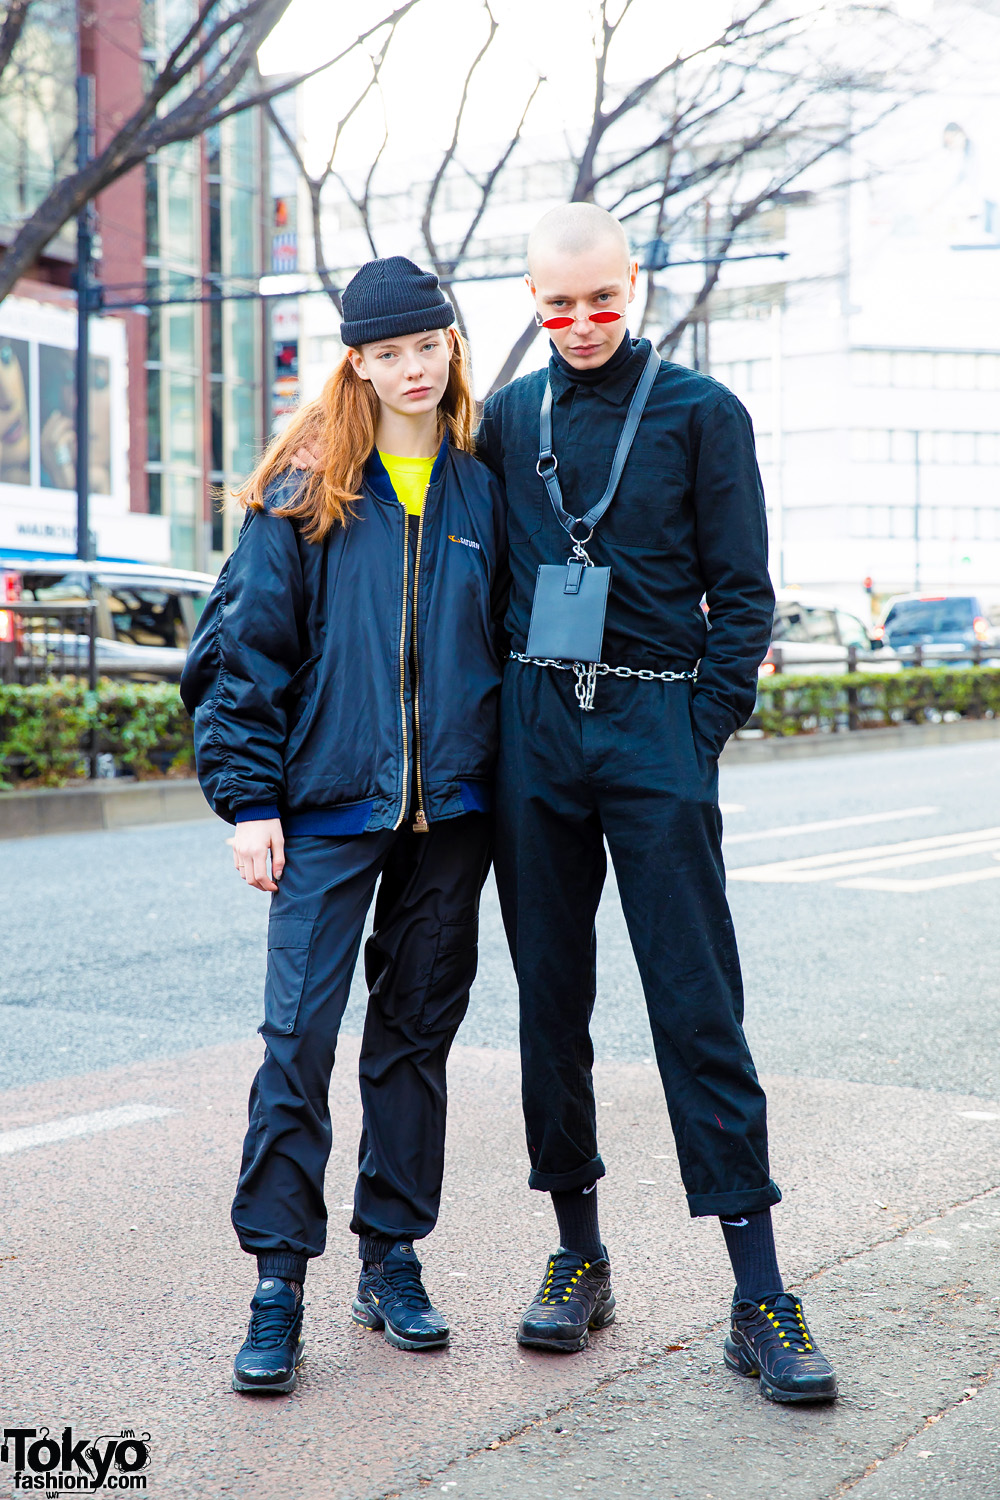 Leather Bomber Jacket & Jean Shorts in Harajuku – Tokyo Fashion